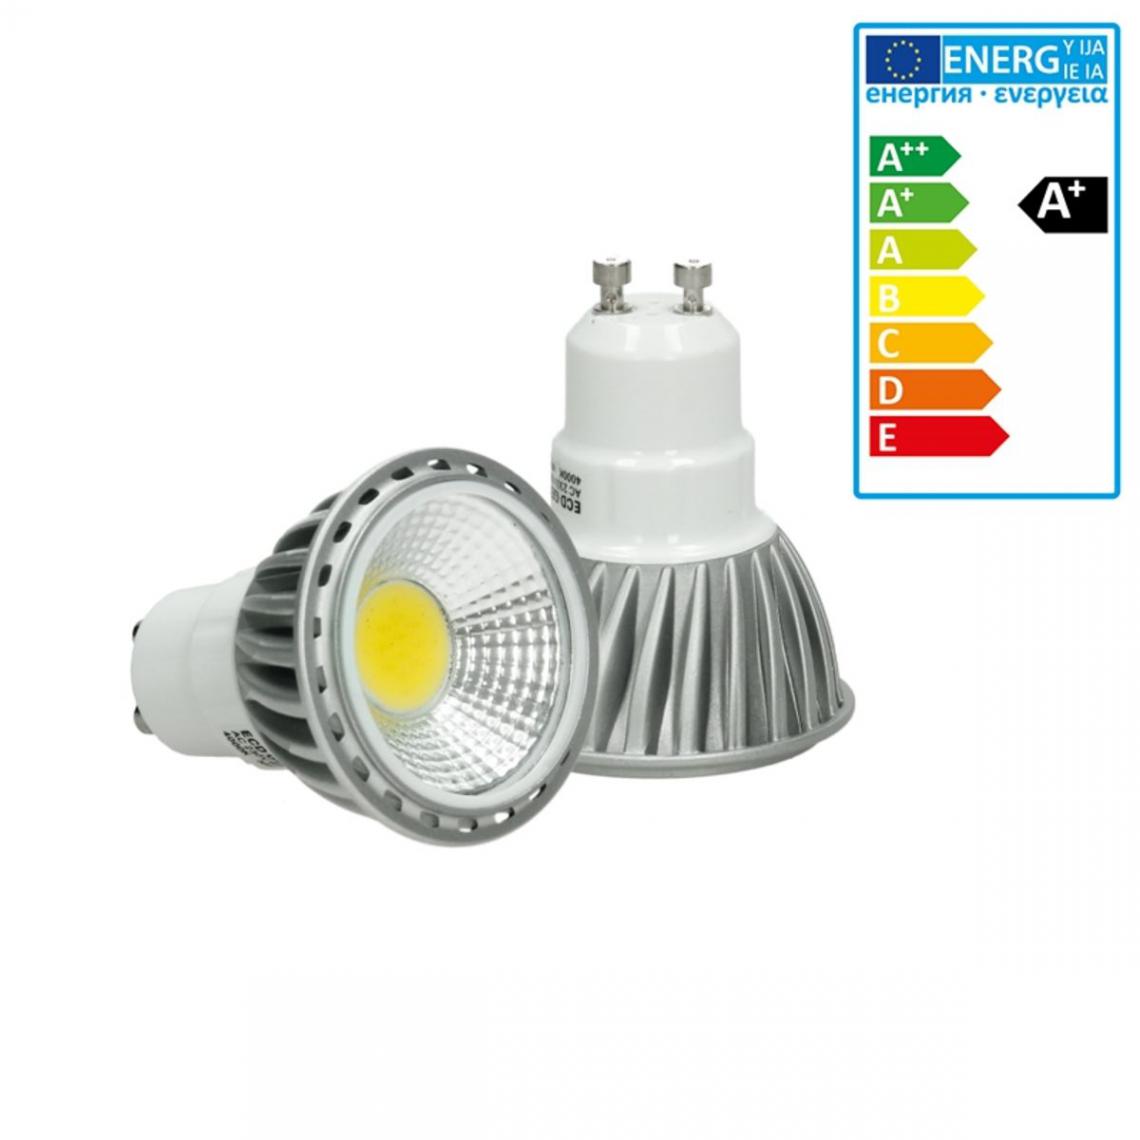 Ecd Germany - ECD Germany LED COB GU10 Spot Lampe Ampoule Blanc Neutre 6W Dimmable - Ampoules LED